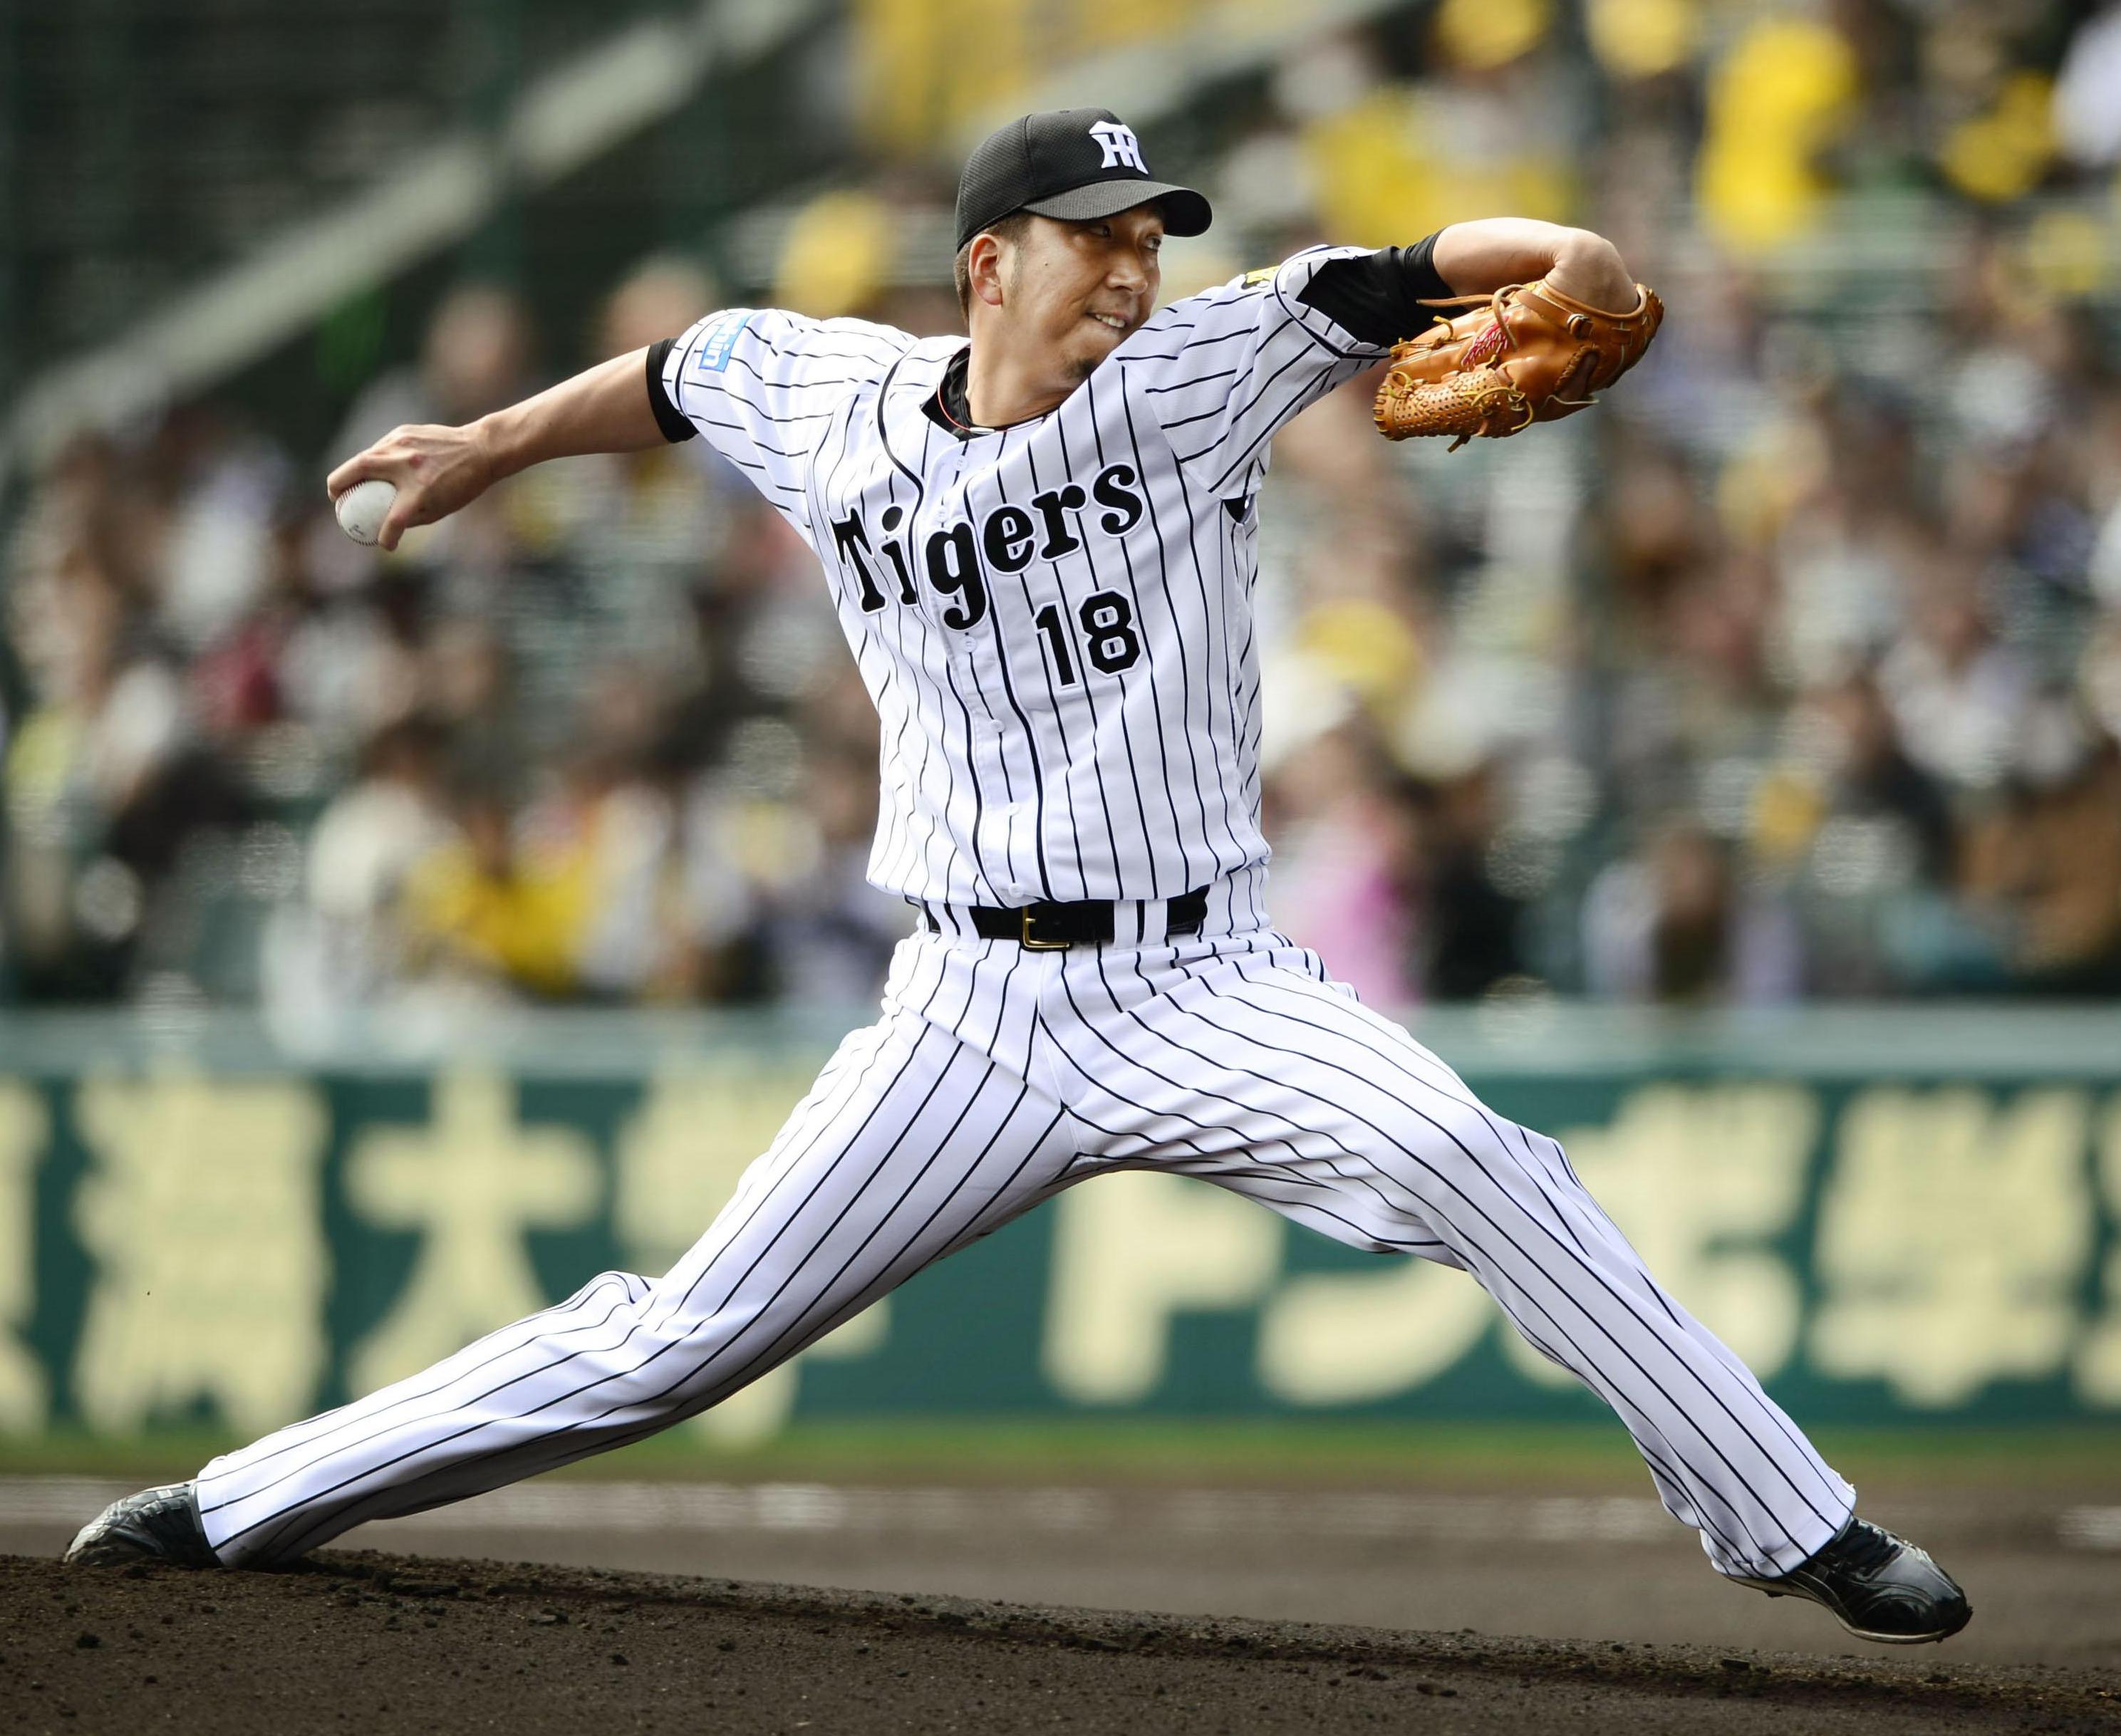 Hanshin pitcher Fujikawa growing into new role - The Japan Times